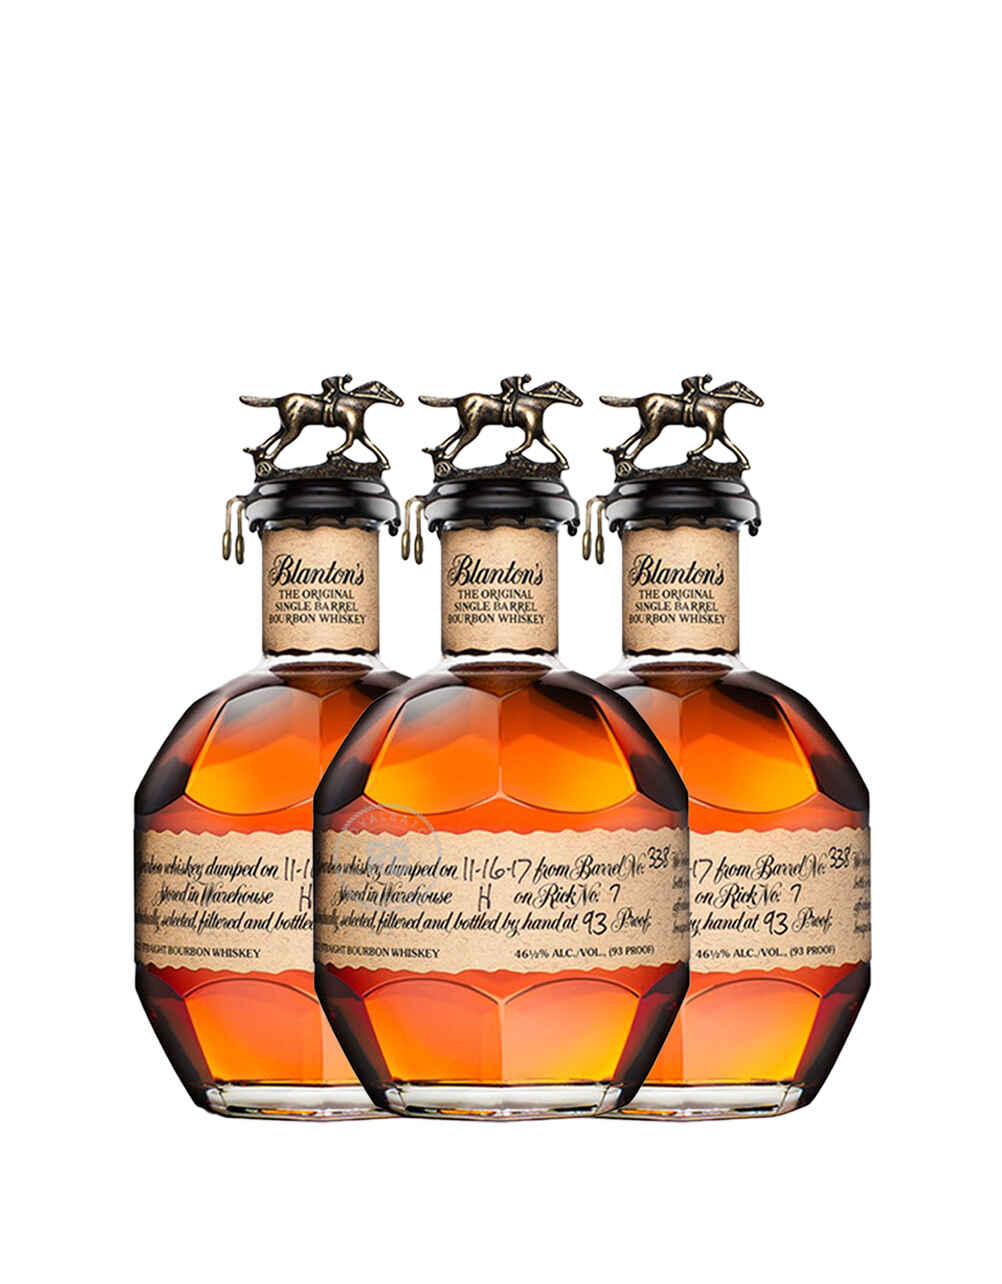 Blanton's Original Single Barrel Bourbon Whiskey (3 Pack) Bundle #007